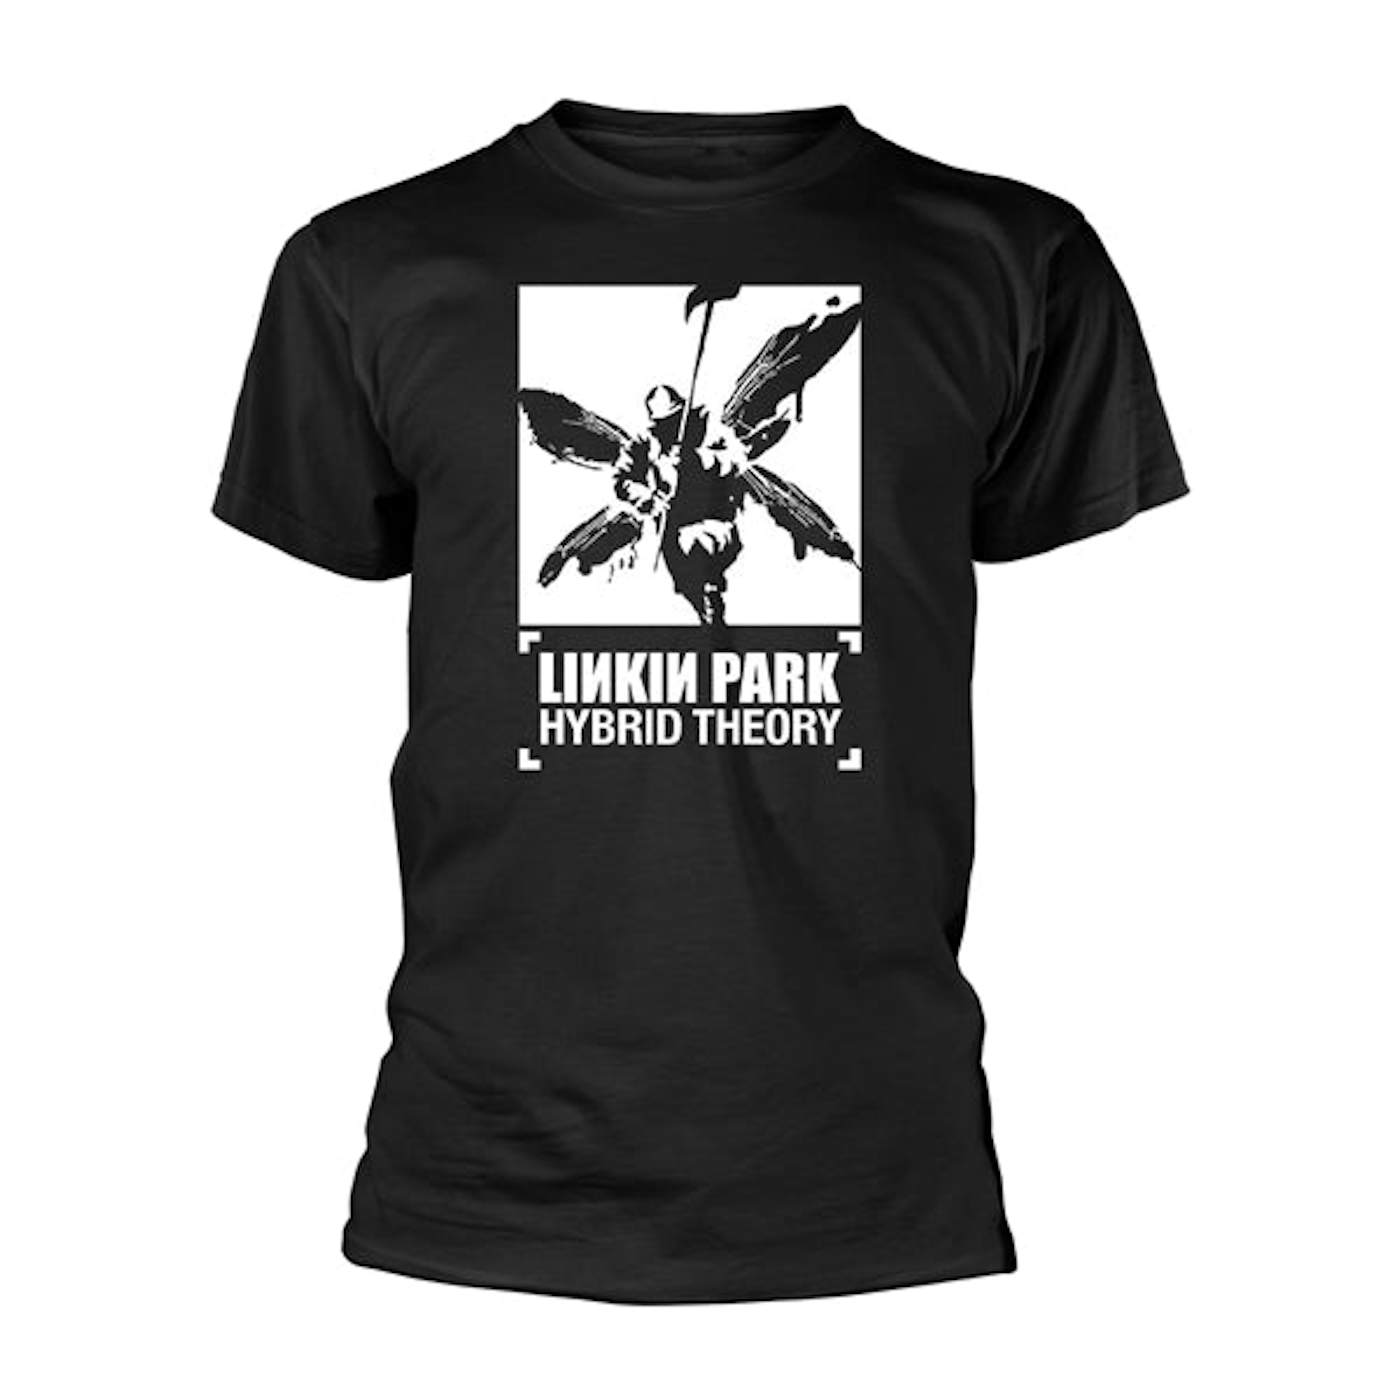 PAPERCUTS STANDARD CD  Linkin Park Official Store